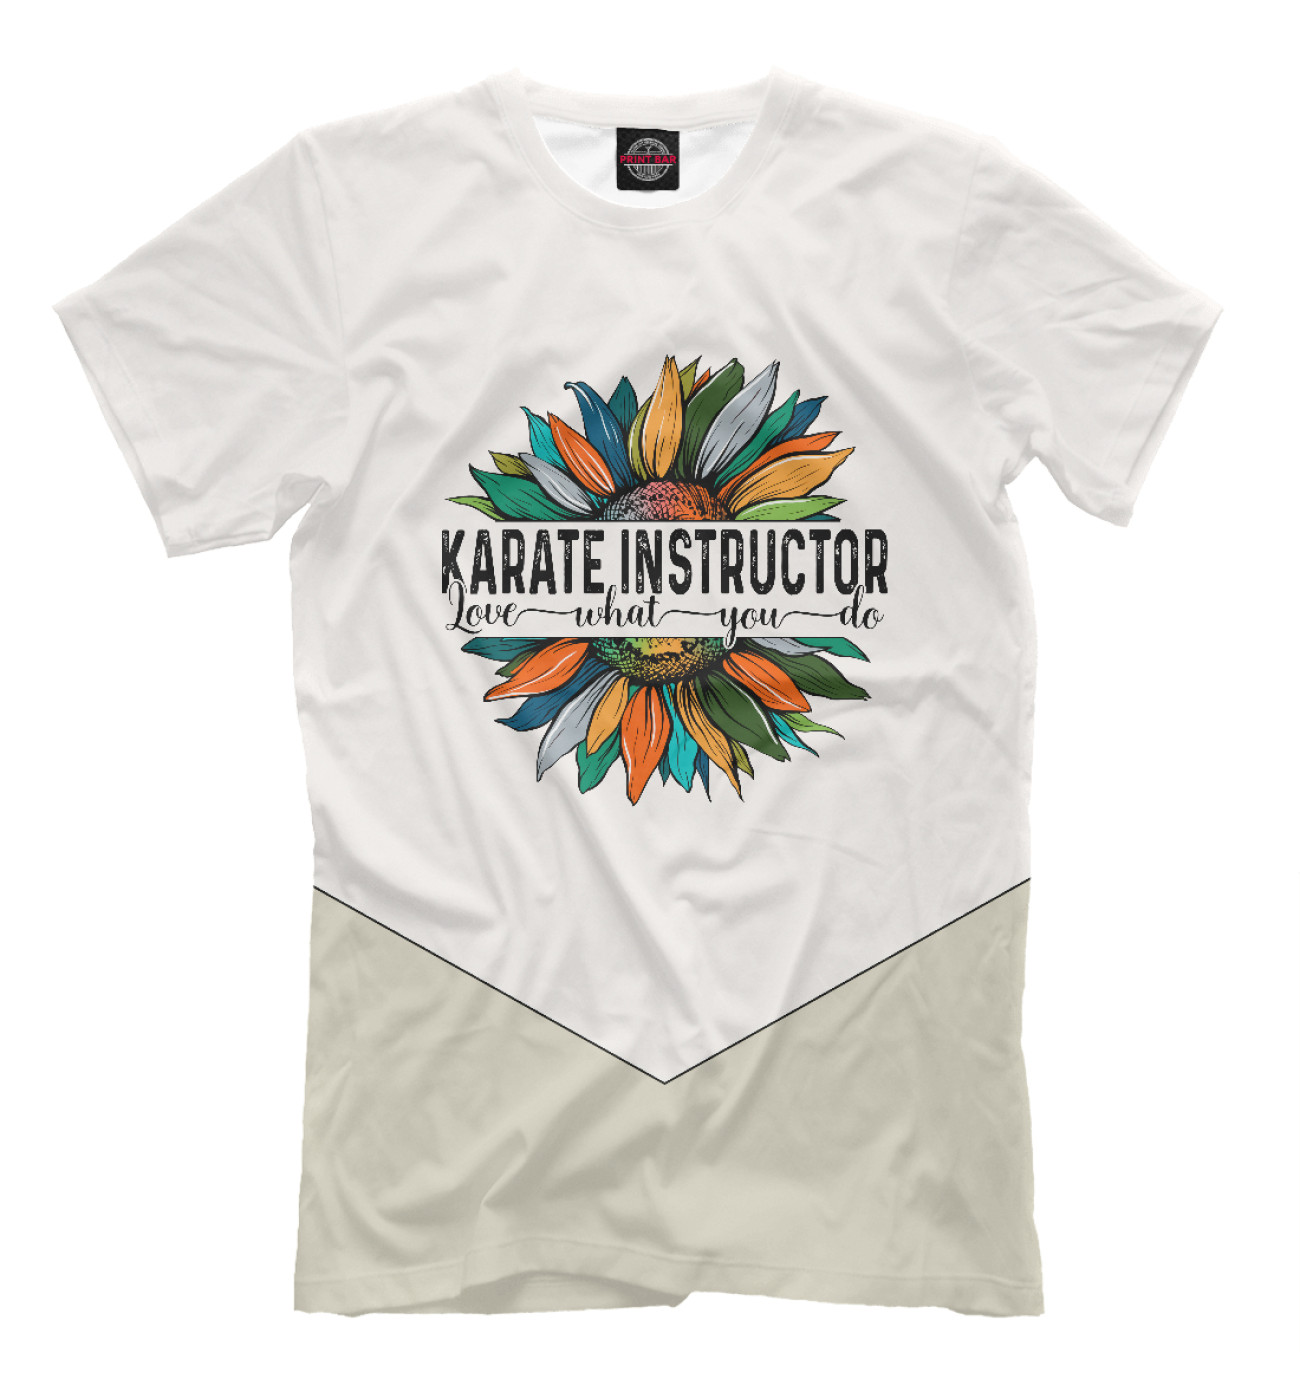 Мужская Футболка Karate Instructor Love What, артикул: KRT-522917-fut-2